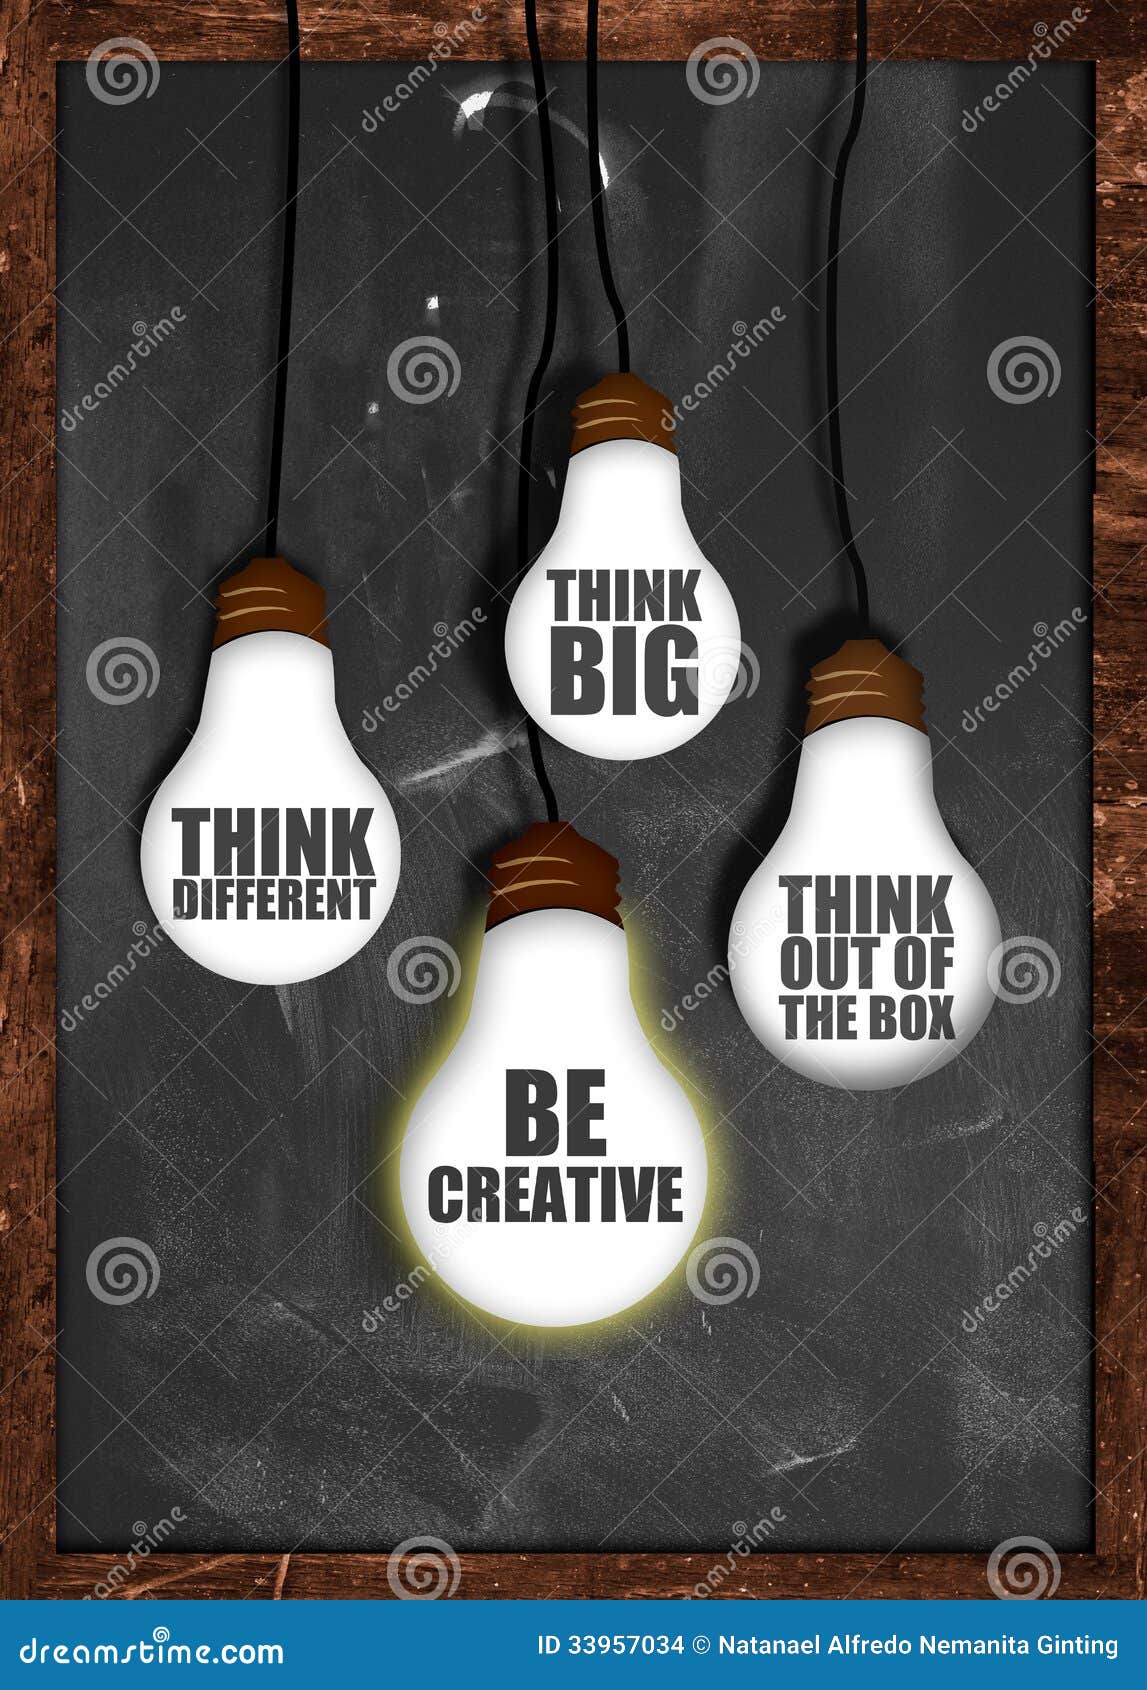 think big , be creative